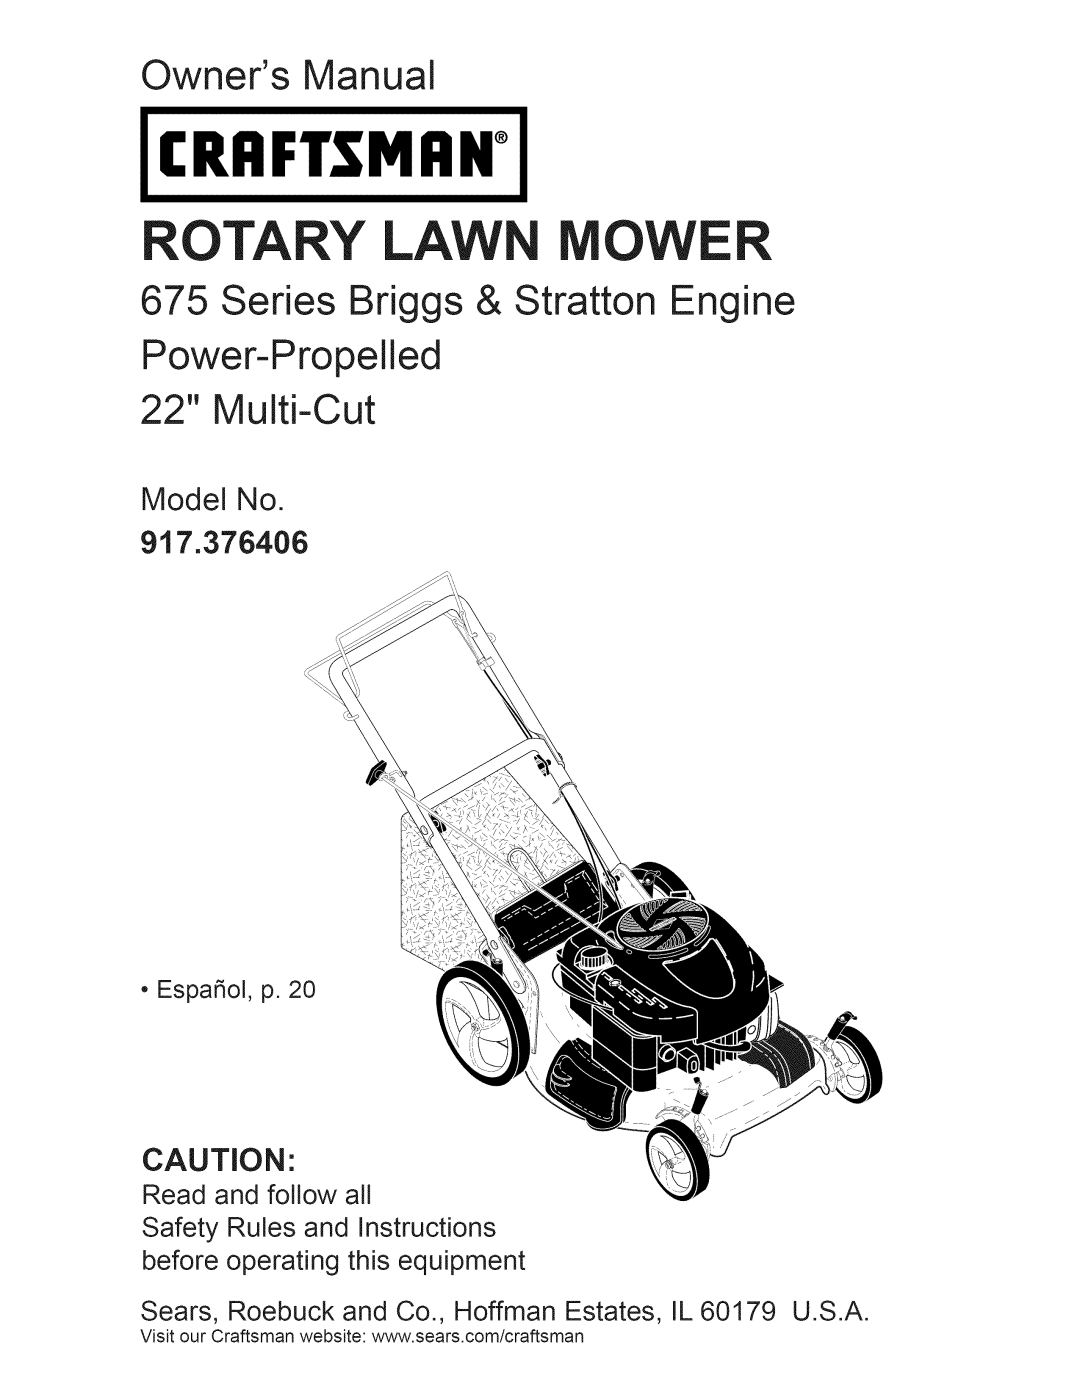 Craftsman owner manual Model No 917.376406, Craftsman, Rotary Lawn Mower, Owners Manual, Power-Propelled 22 Multi-Cut 